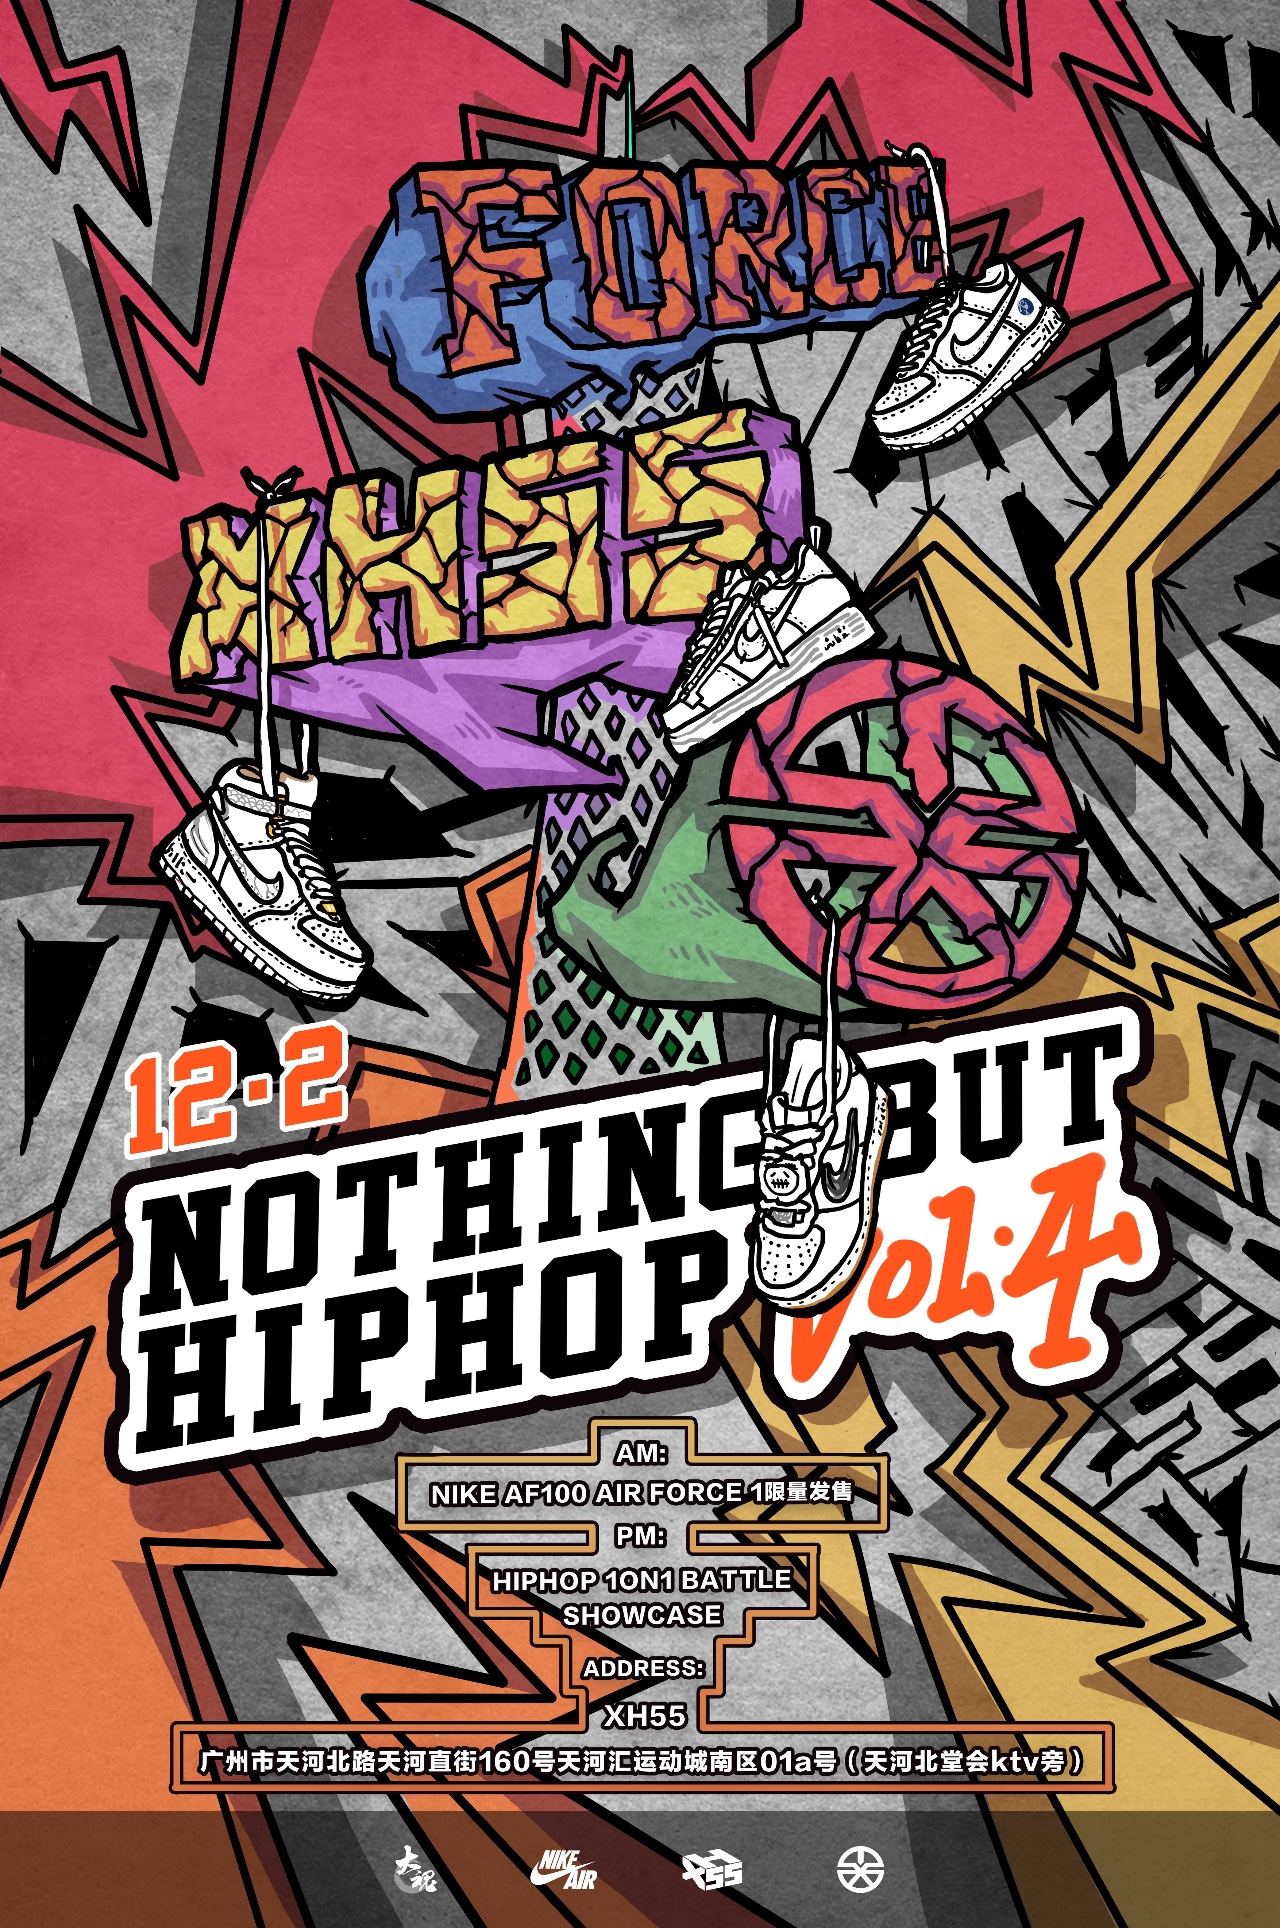 「xh55 | 12月2号nothing but hiphop系列活动 终极揭秘 」